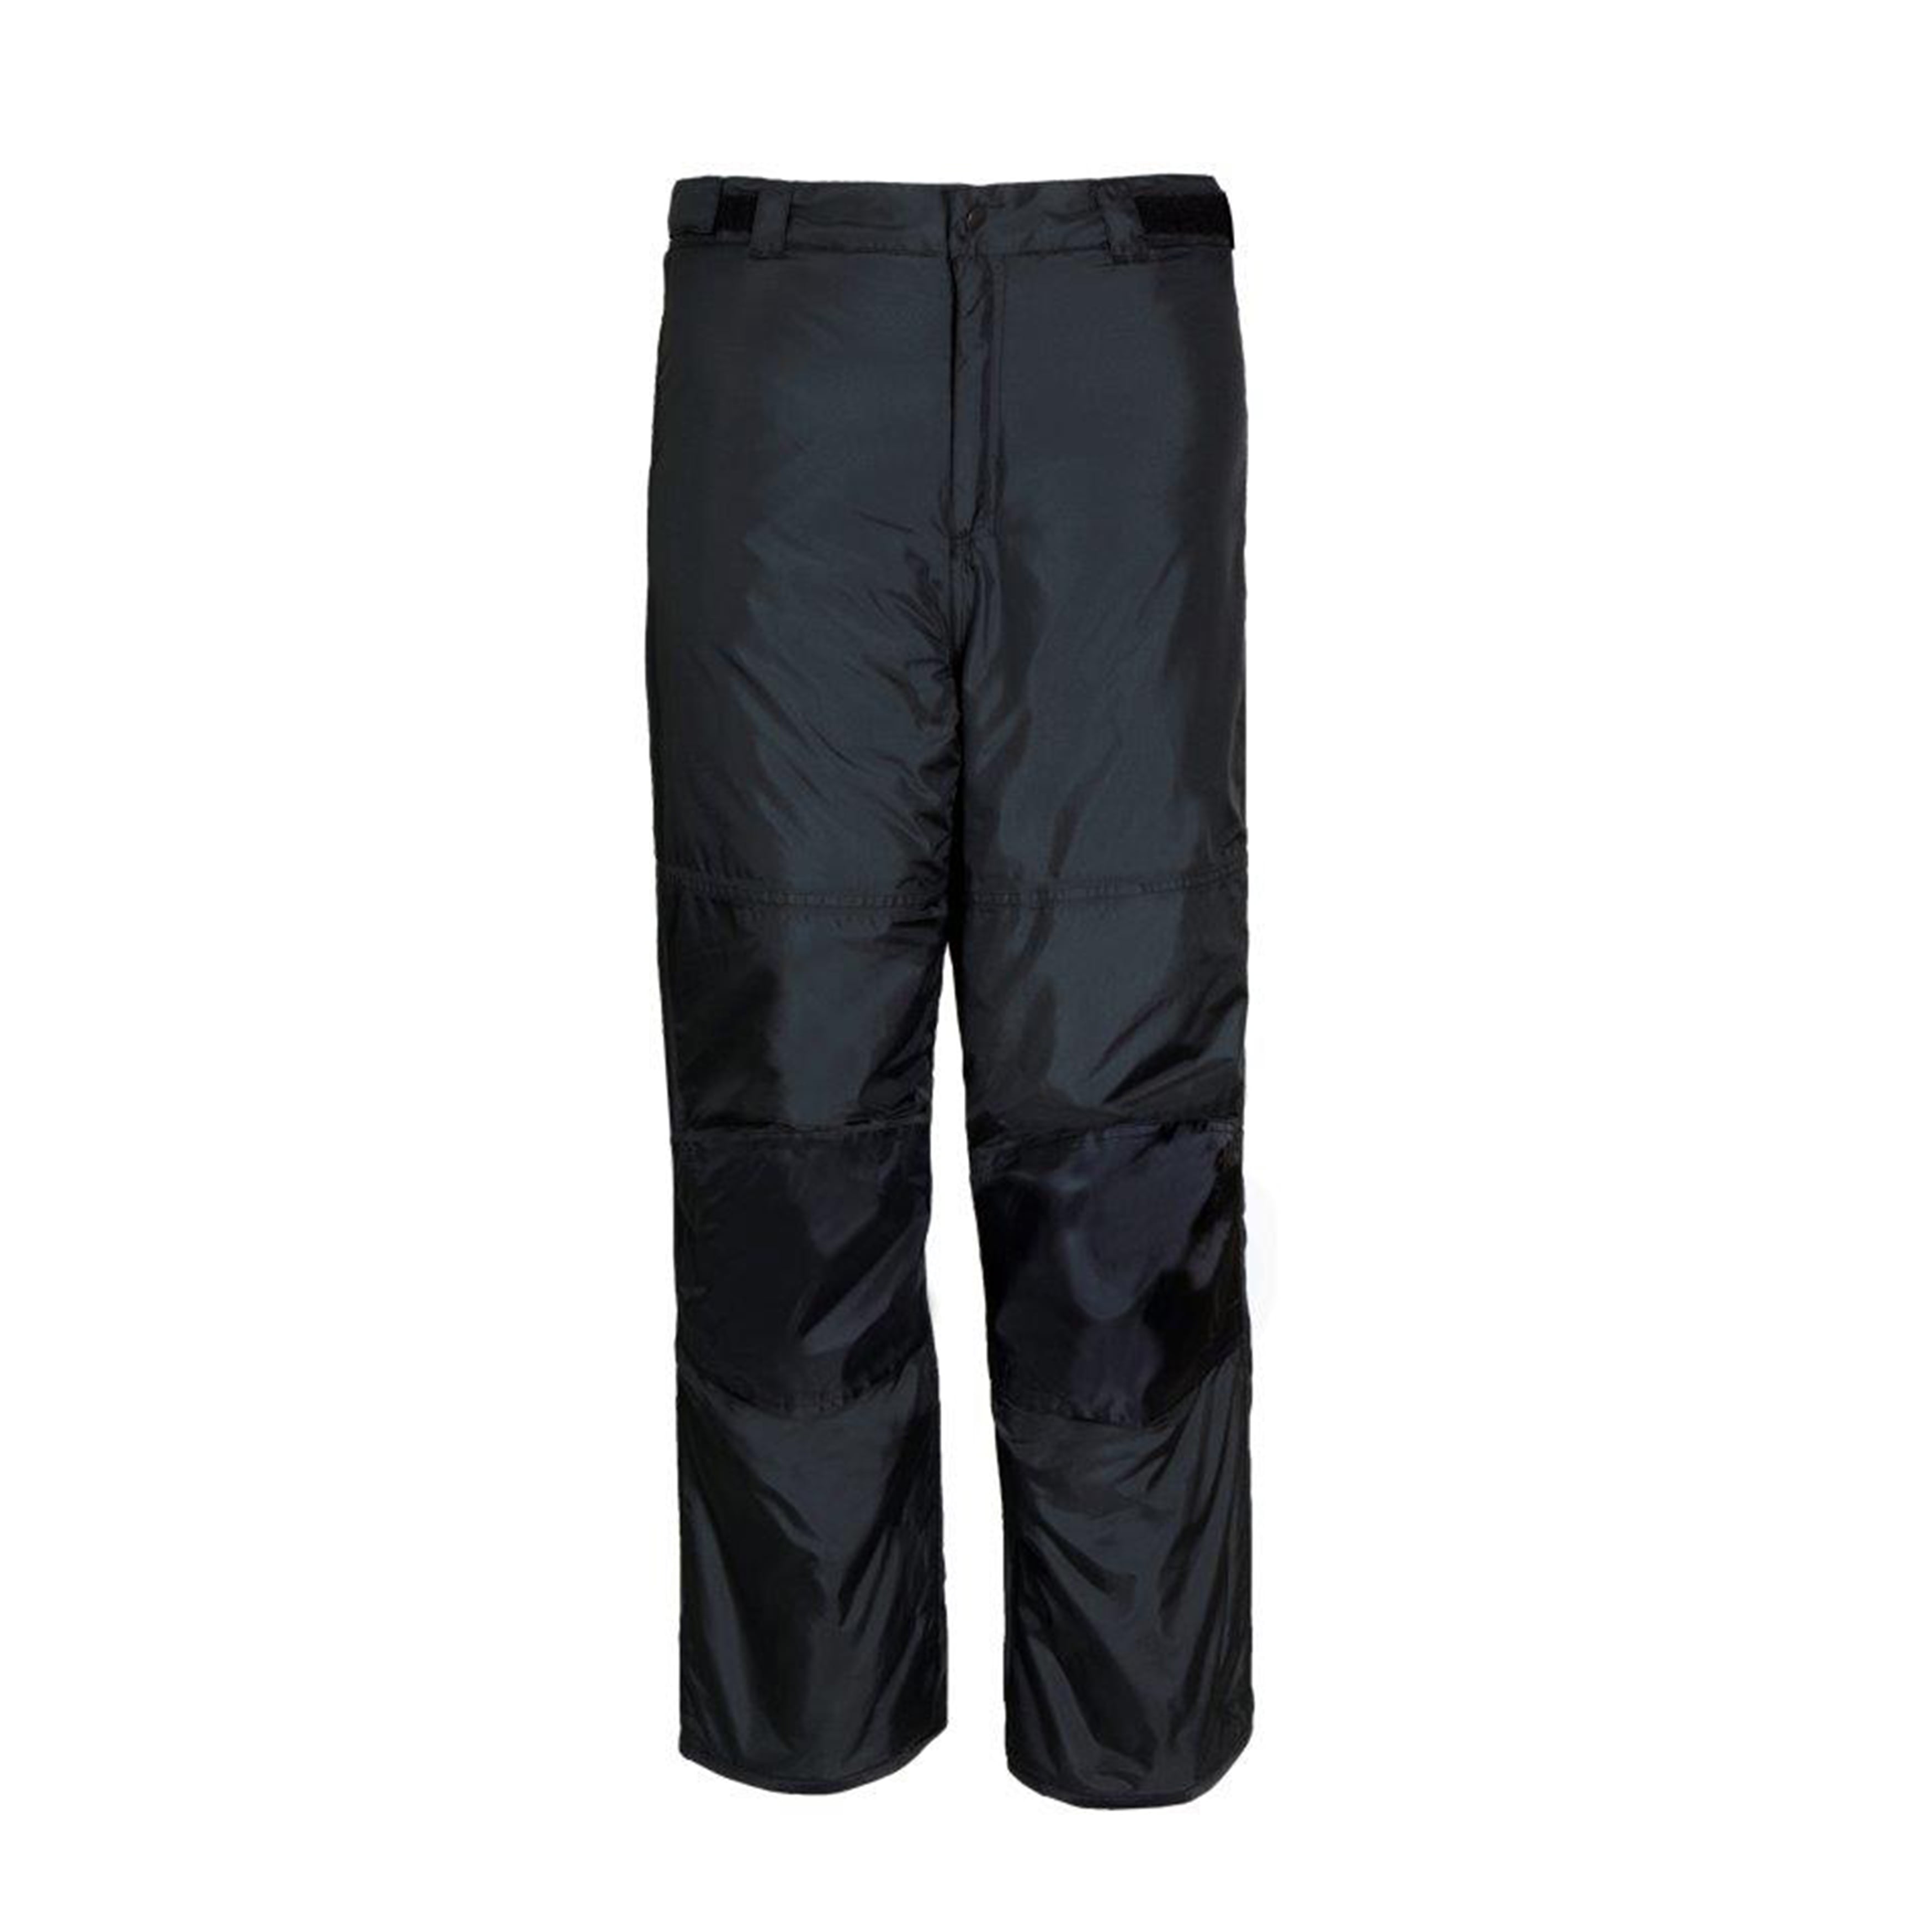 Sledmate Boy's Black Snow & Winter Pants Size 18, Multiple Sizes ...